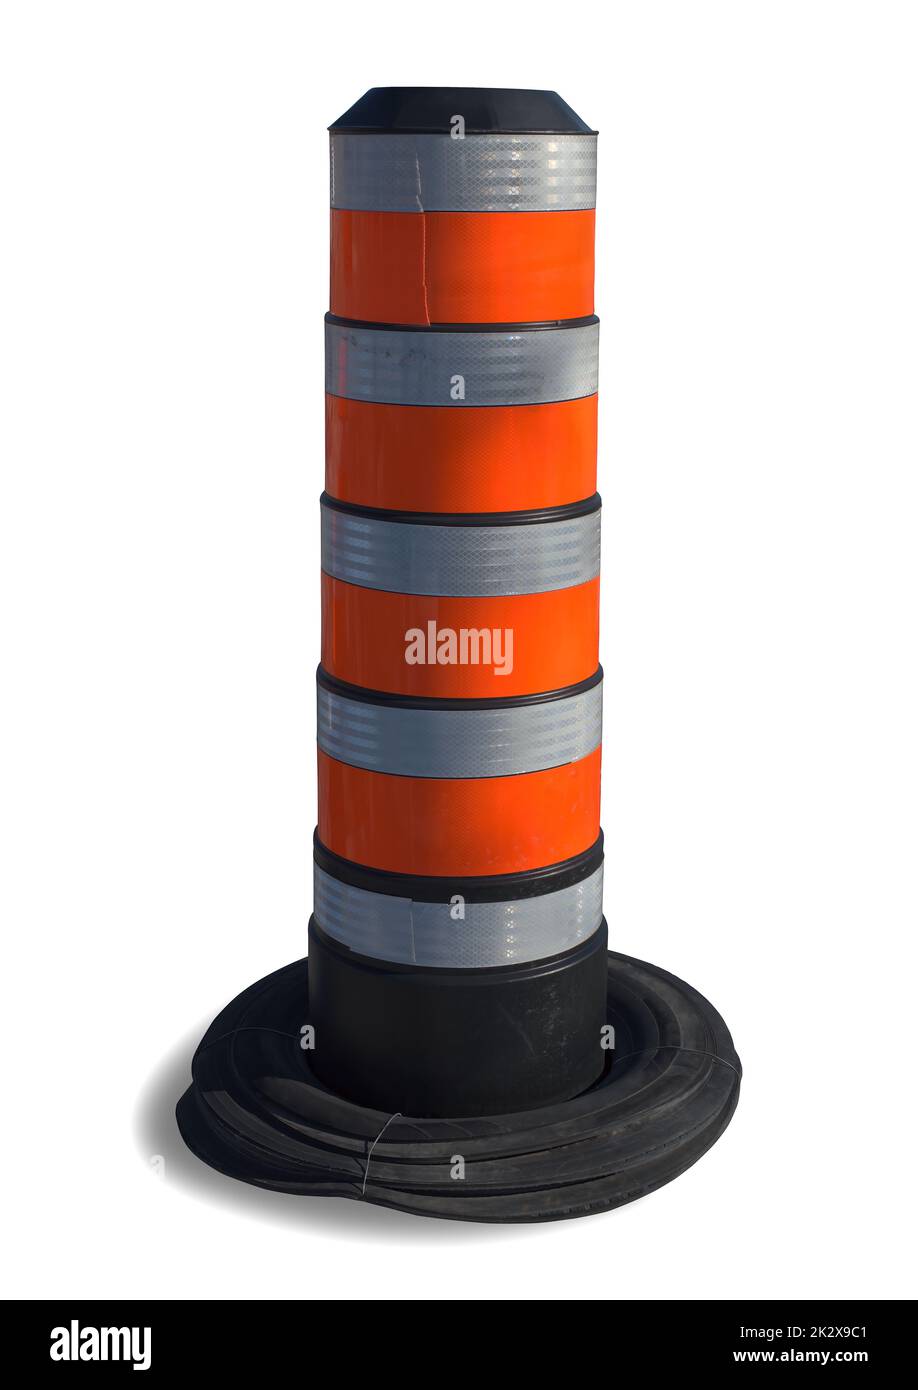 web site under construction 404 error orange traffic cone isolated on white background Stock Photo